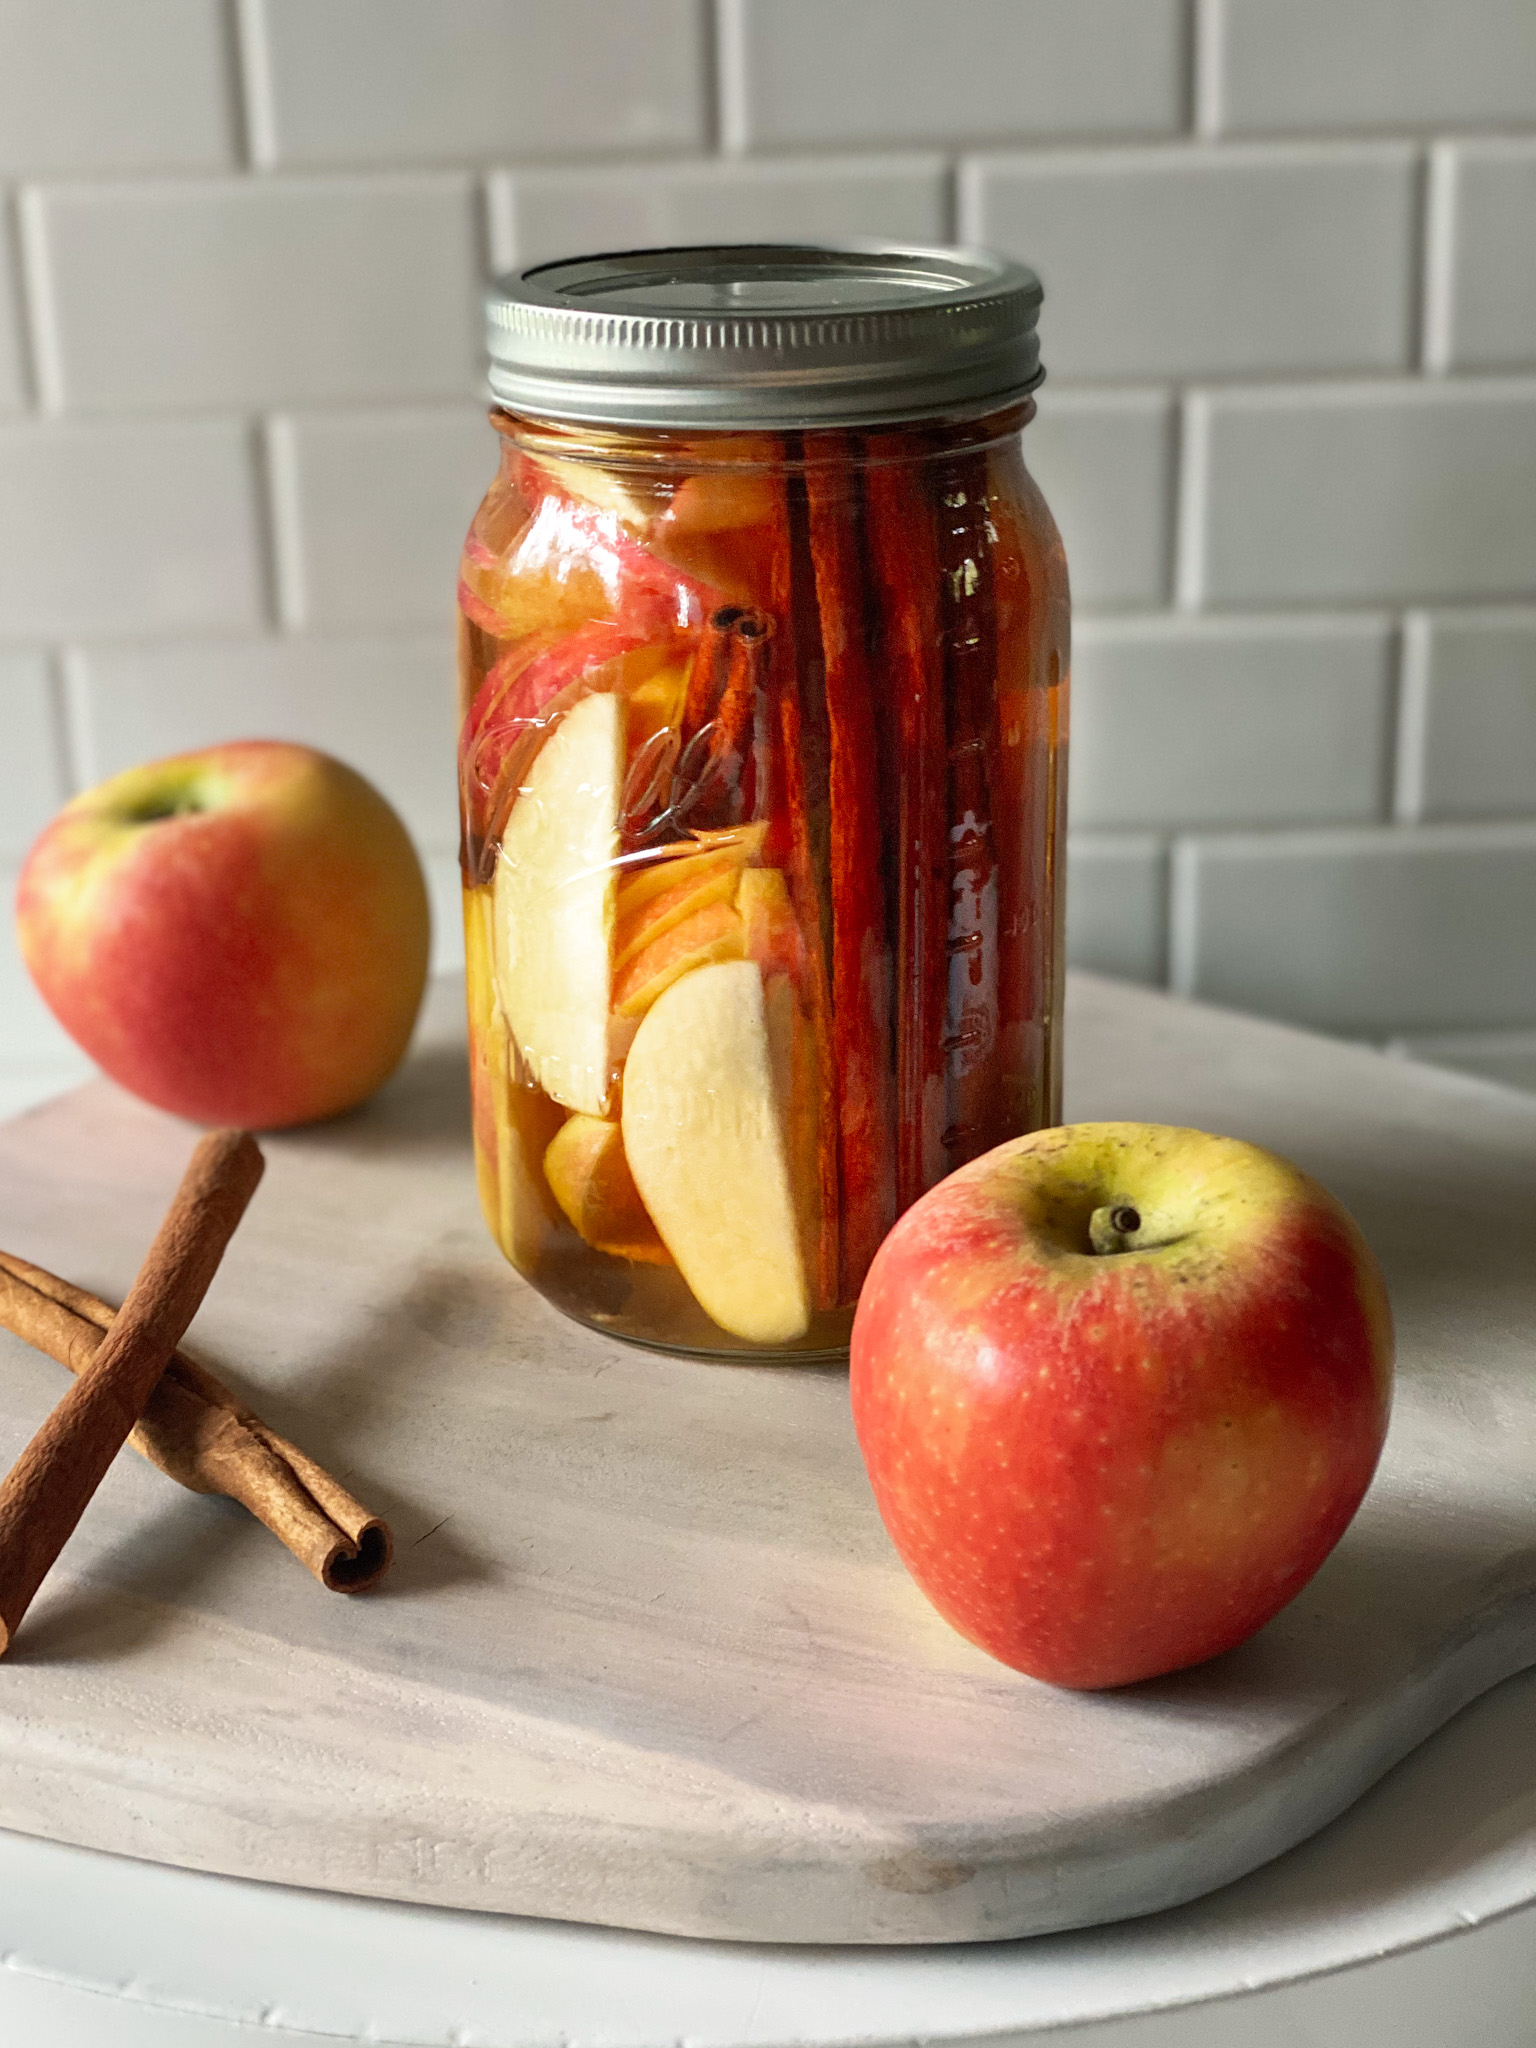 bourbon in a mason jar with apples and cinnamon sticks